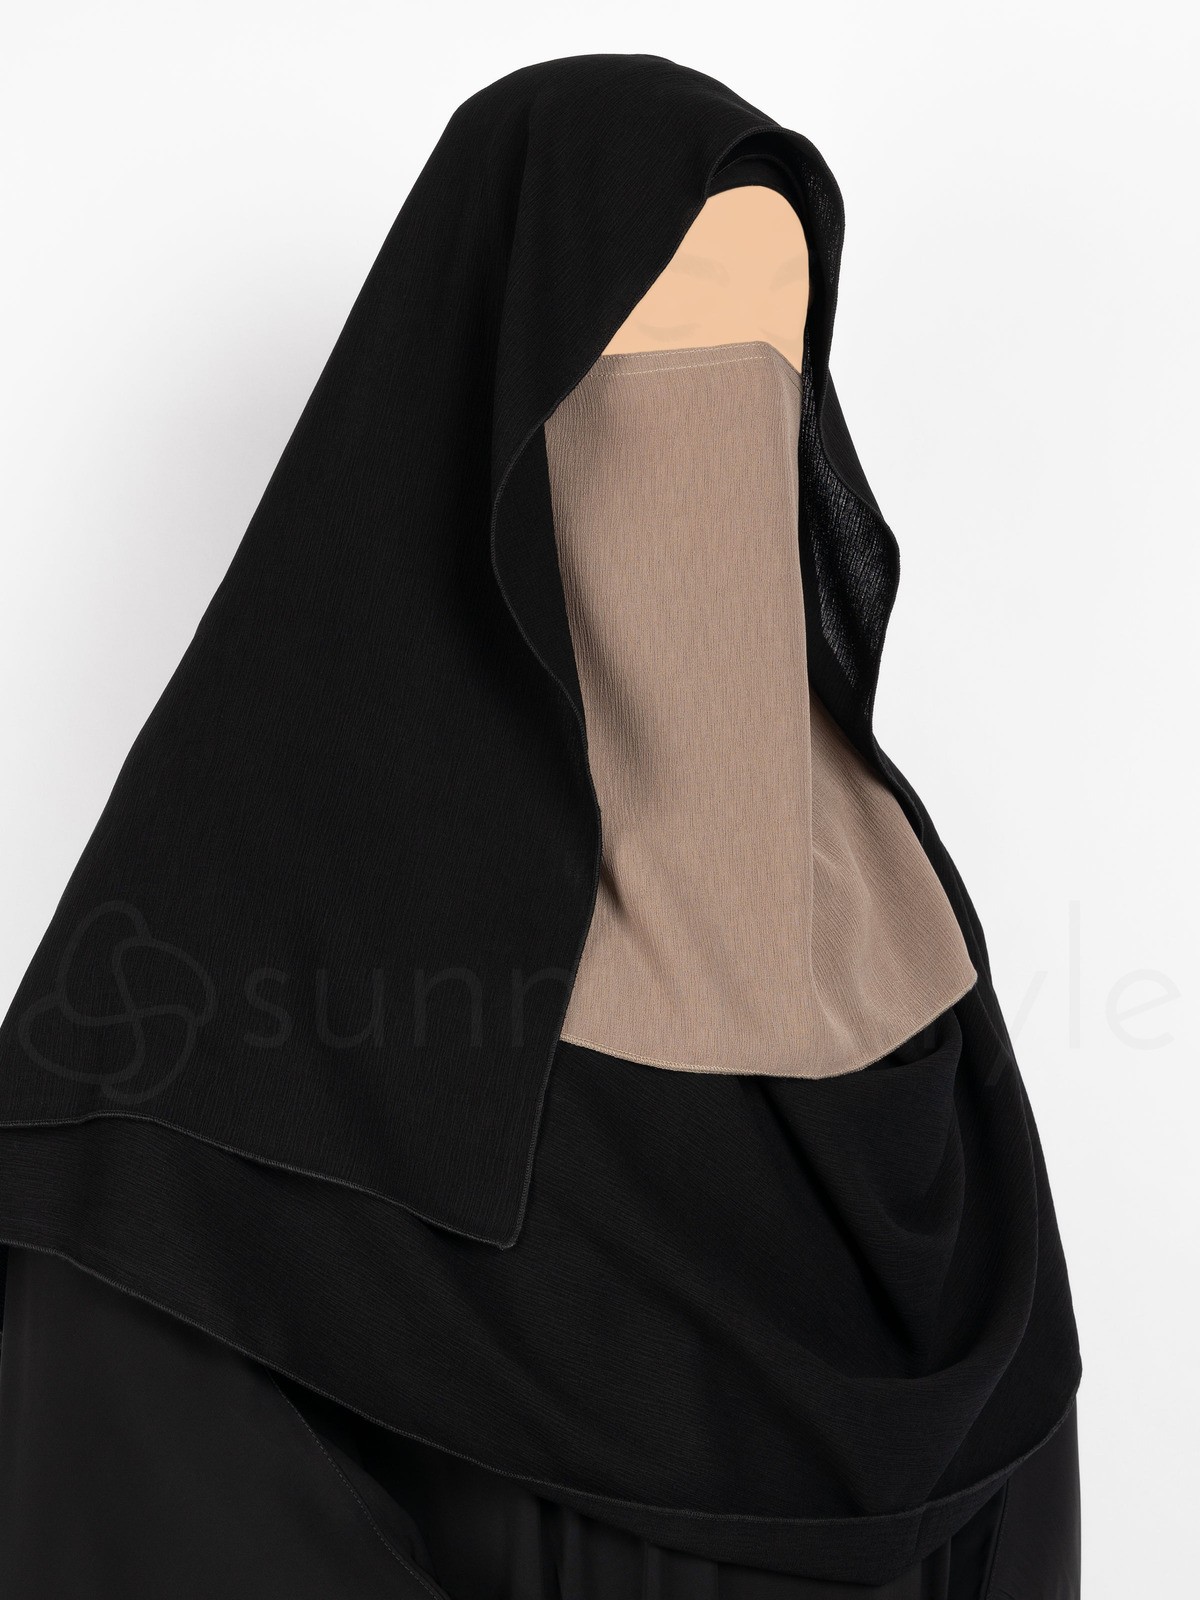 Sunnah Style - Brushed Half Niqab (Army)